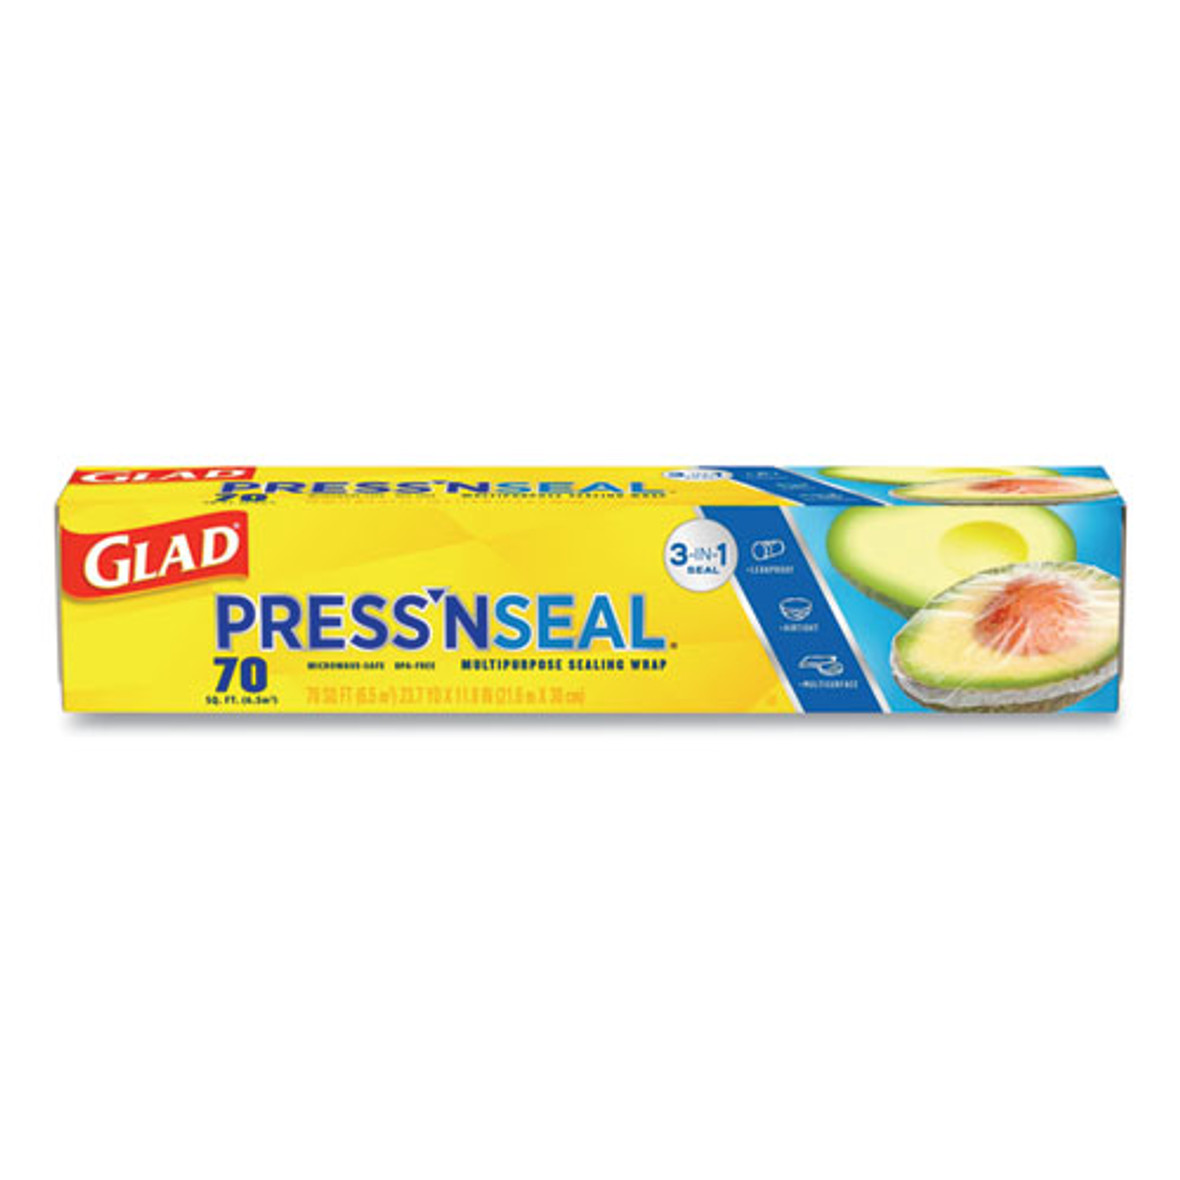 Glad® Press'n Seal Food Plastic Wrap, 70 Square Foot Roll, 12 Rolls/Carton